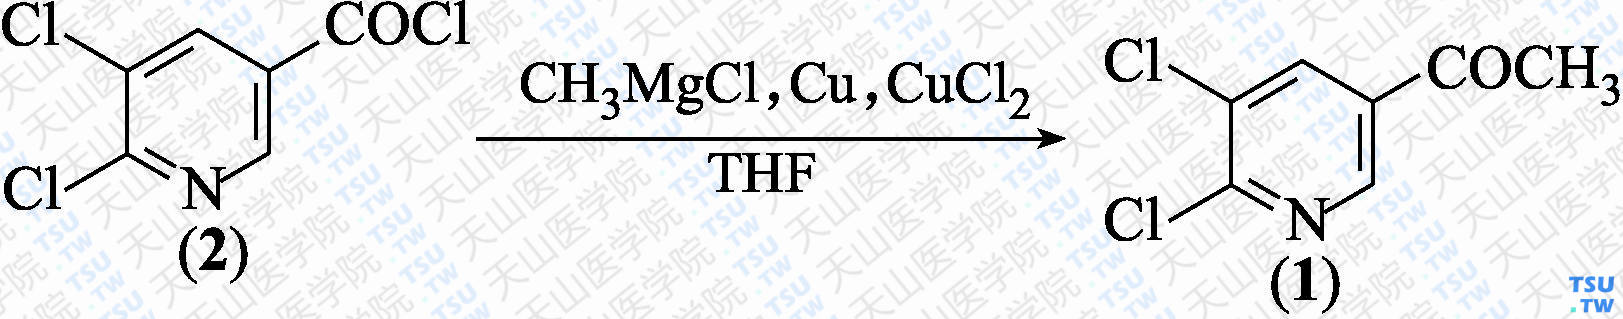 2，3-二氯-5-乙酰基吡啶（分子式：C<sub>7</sub>H<sub>5</sub>Cl<sub>2</sub>NO）的合成方法路线及其结构式